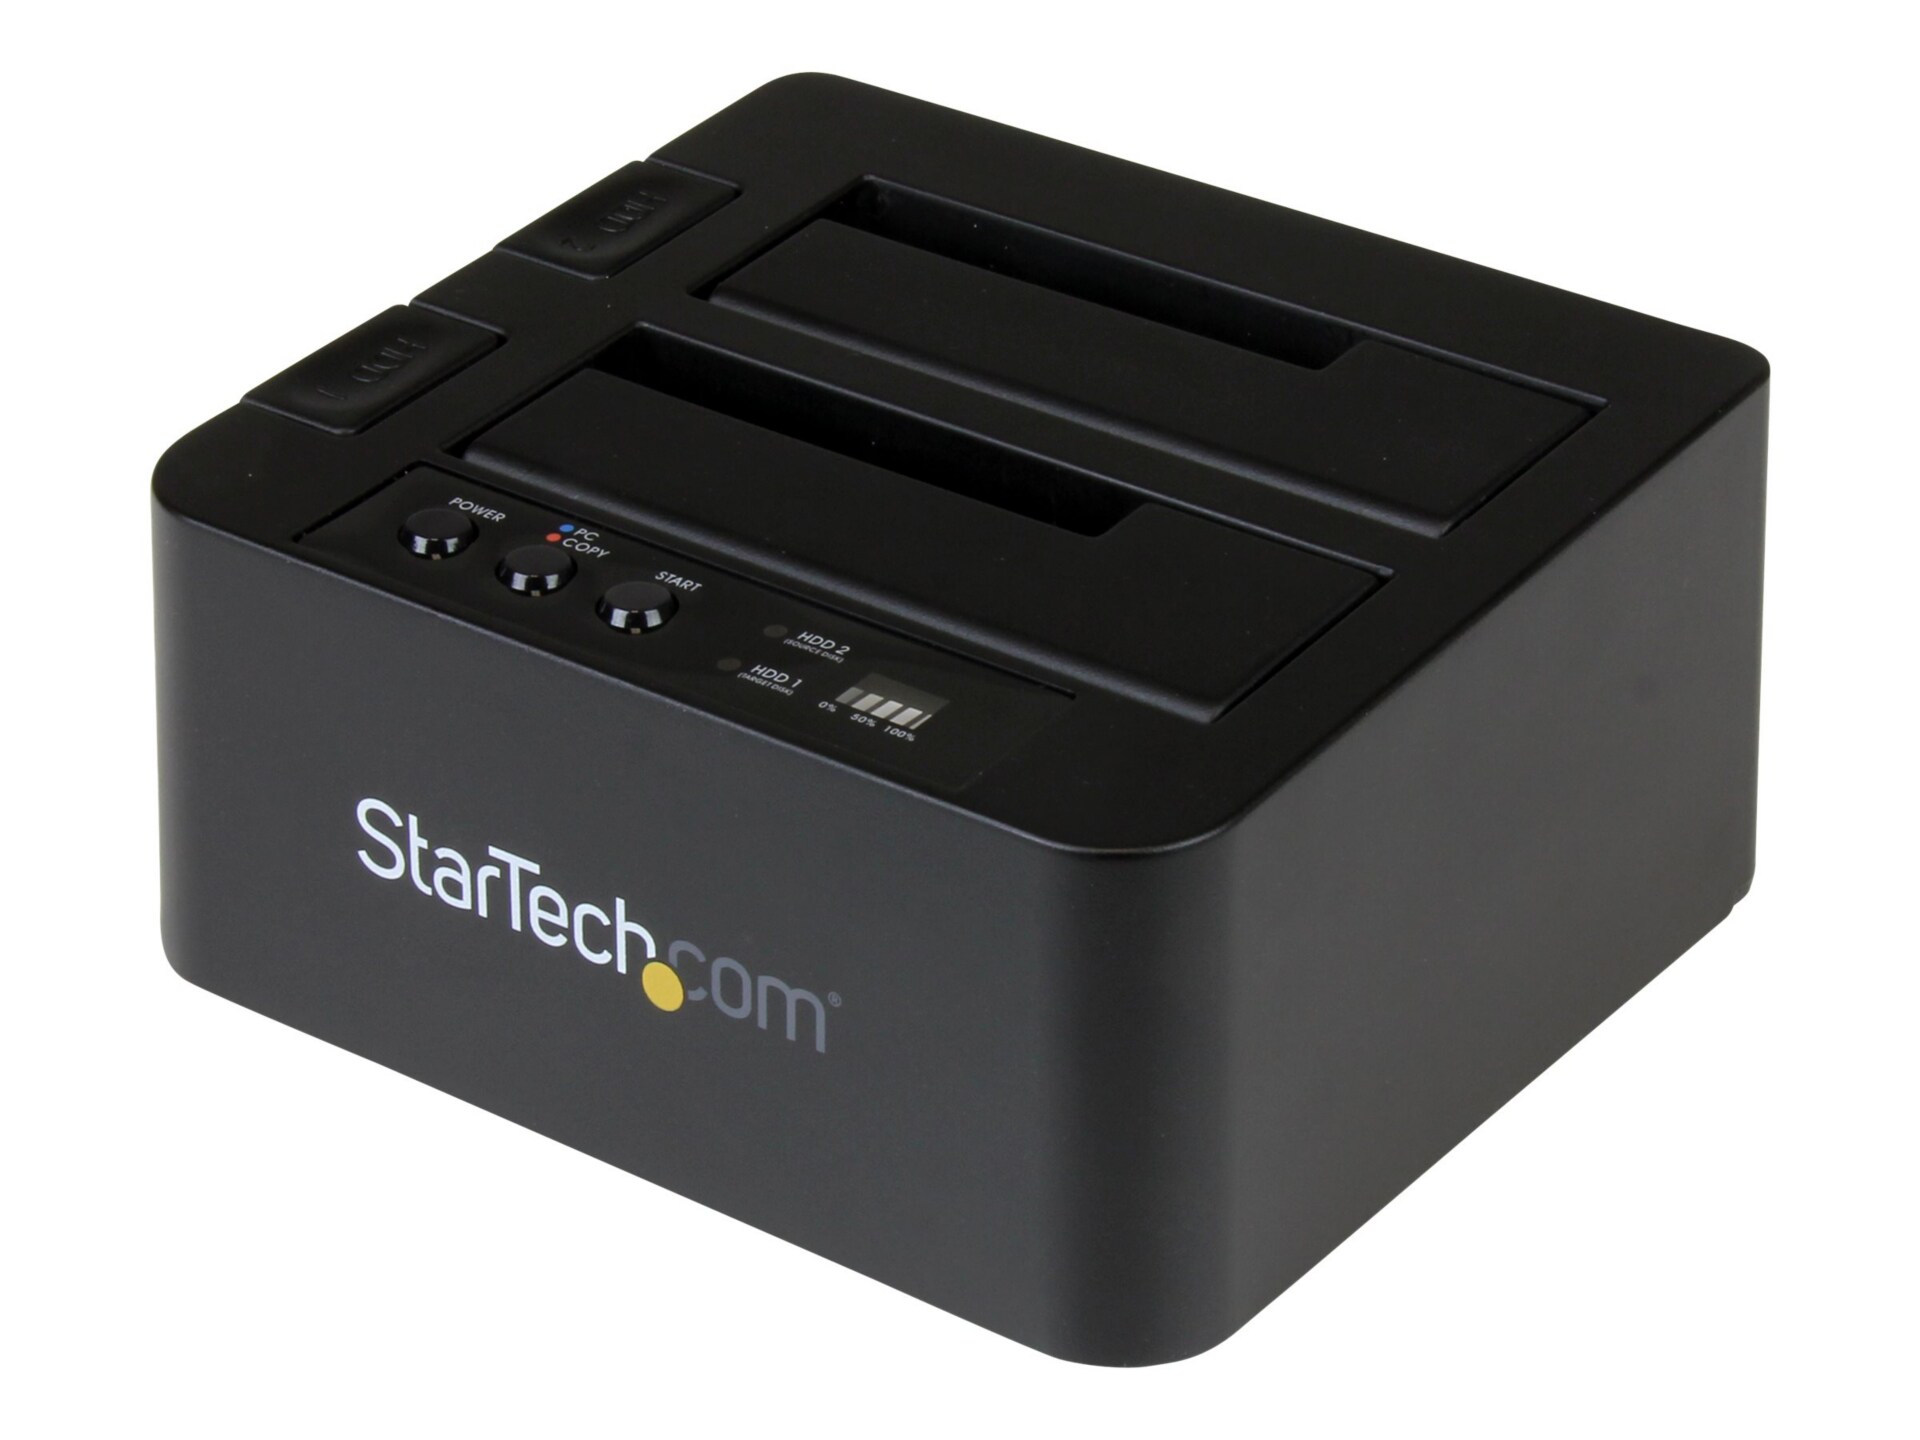 StarTech.com Standalone Hard Drive Duplicator, External Dual Bay HDD/SSD Cloner/Copier, USB 3.1 to SATA Drive Docking